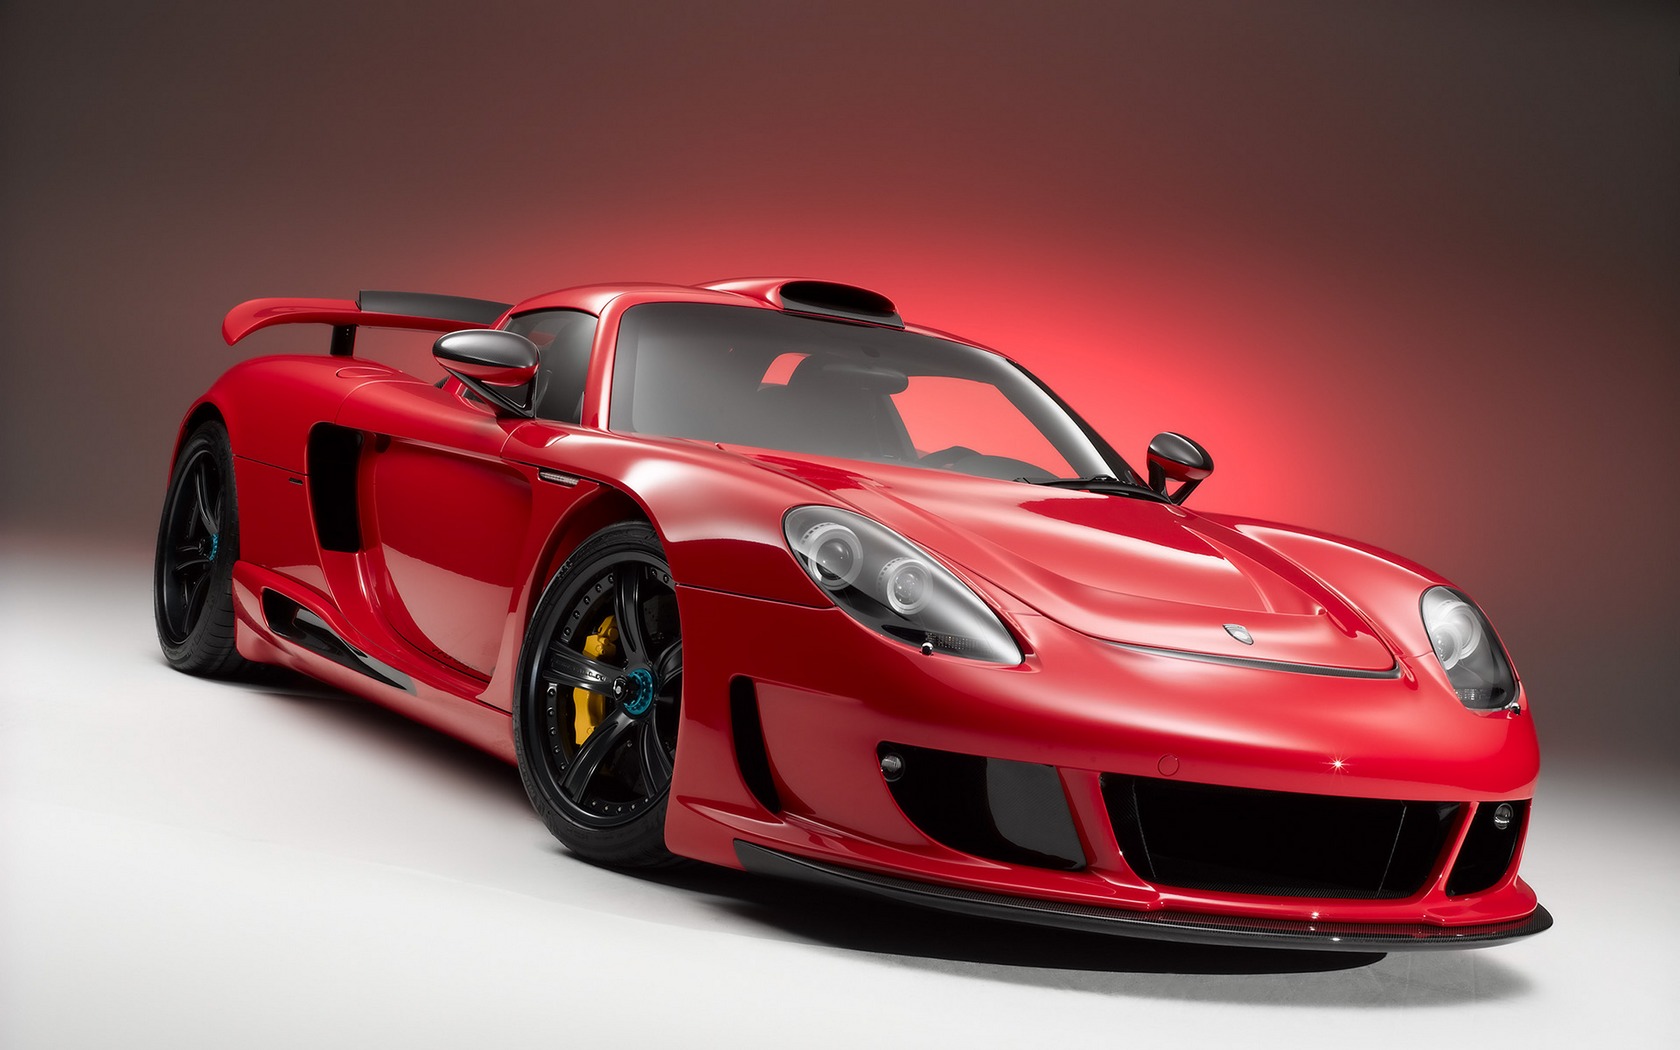 Download full size Porsche-Carrera-GT red Porshe wallpaper / 1680x1050